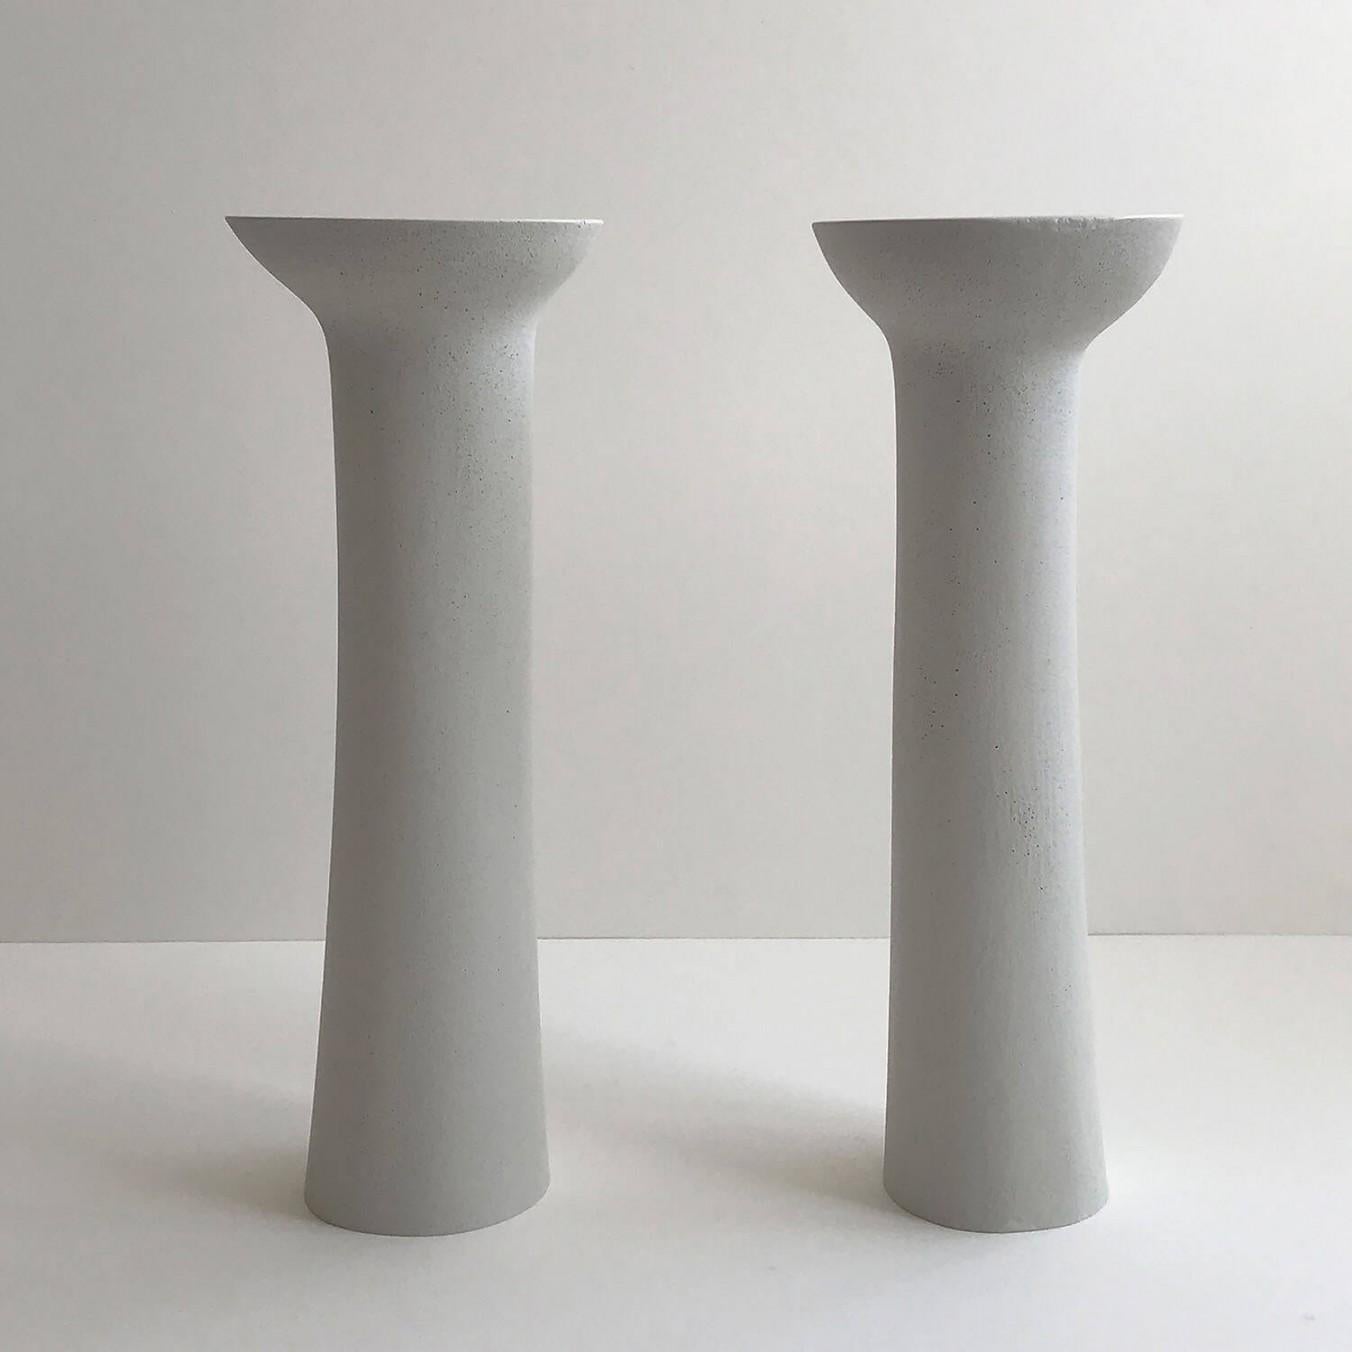 Contemporary White Jesmonite Candleholders by Malgorzata Bany - set of 2

Design: Malgorzata Bany
Material: Jesmonite stone (resin based plaster)

Dimensions (in): Diameter 5 x 13.5